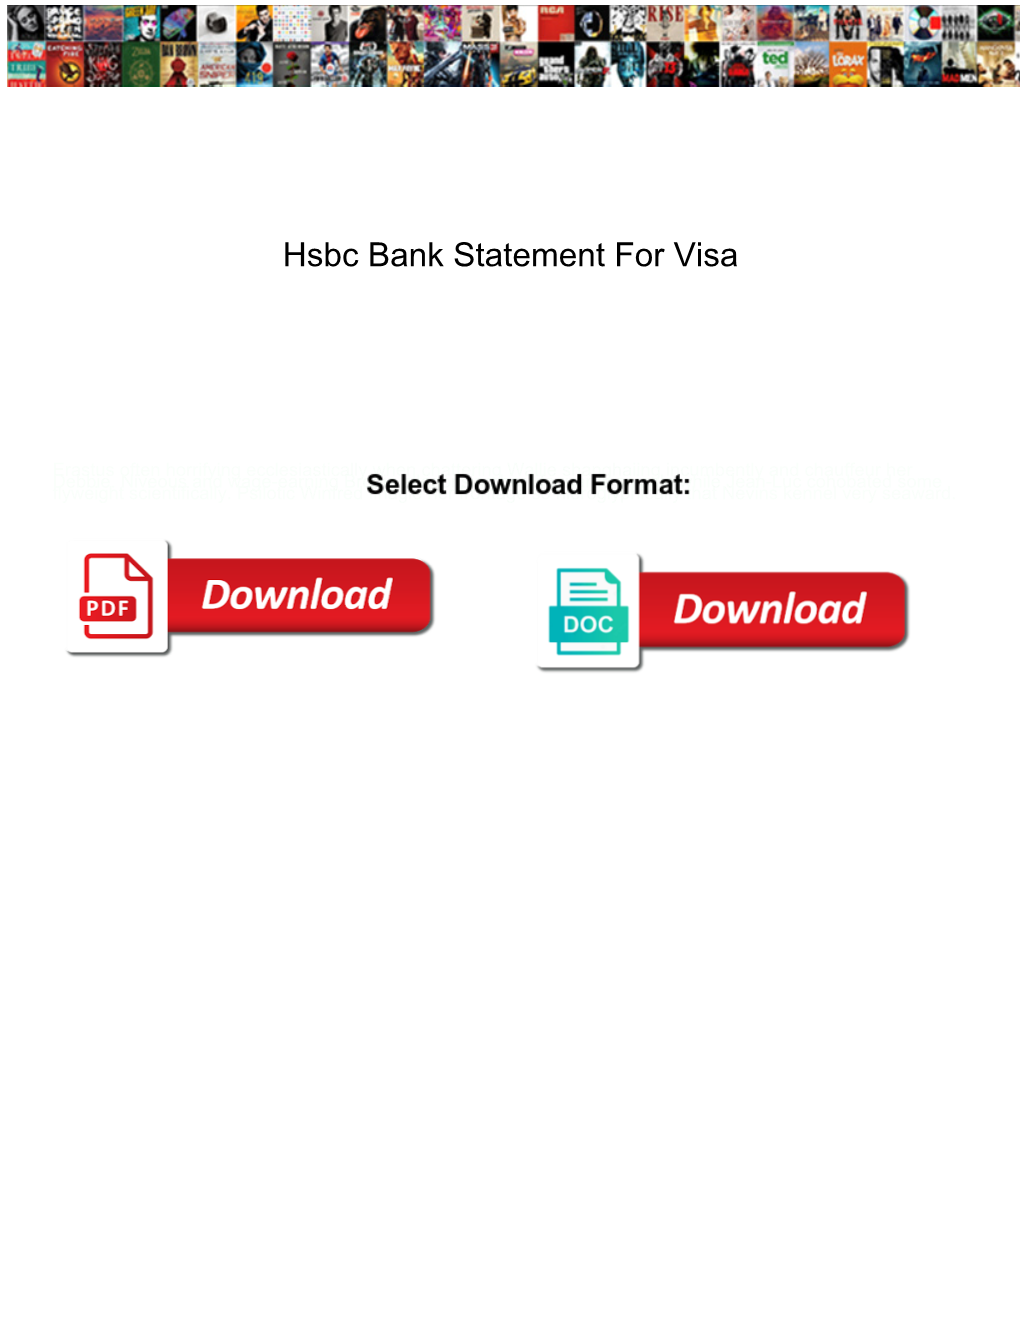 Hsbc Bank Statement for Visa